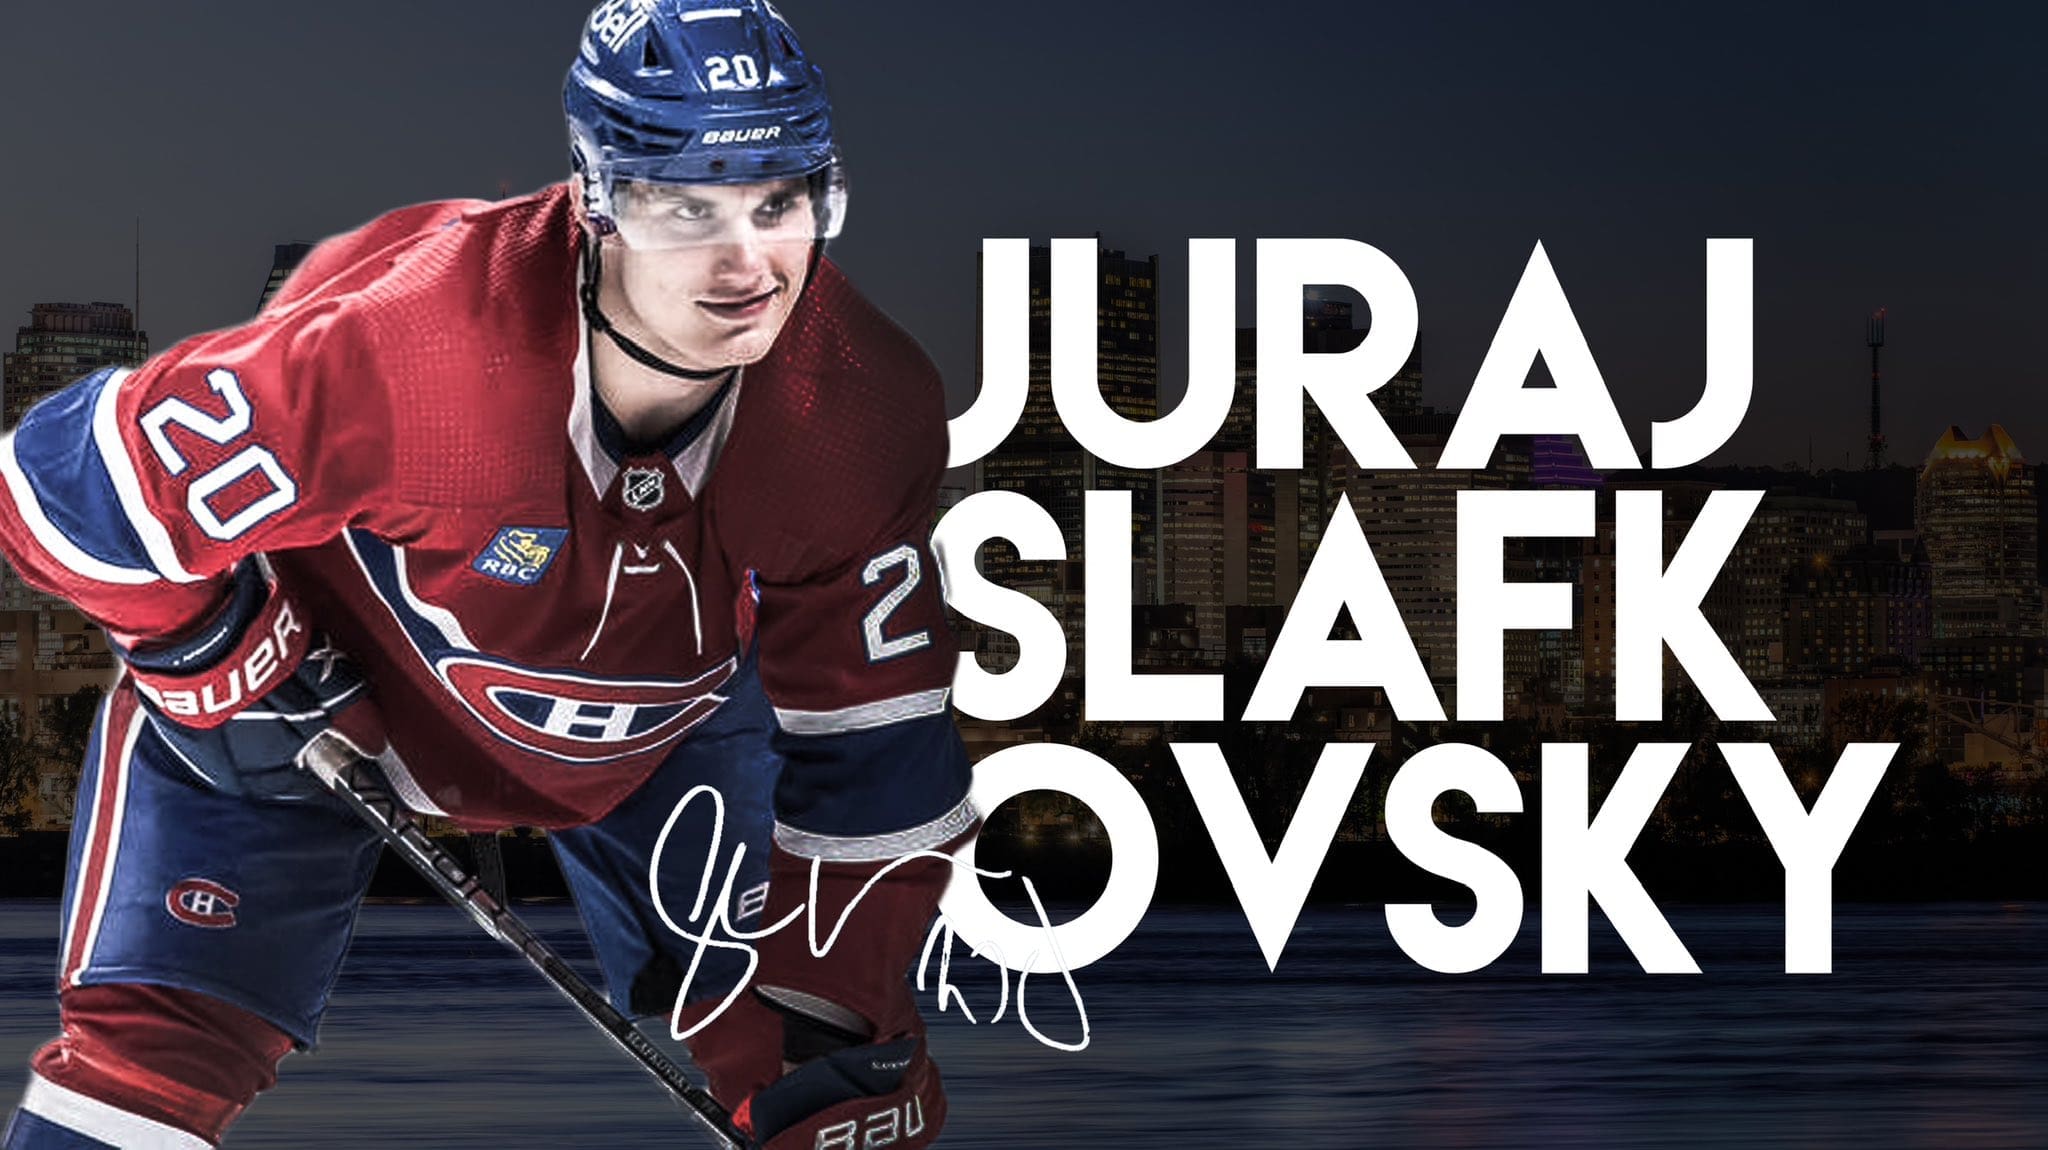 Montreal canadiens forward Juraj Slafkovsky